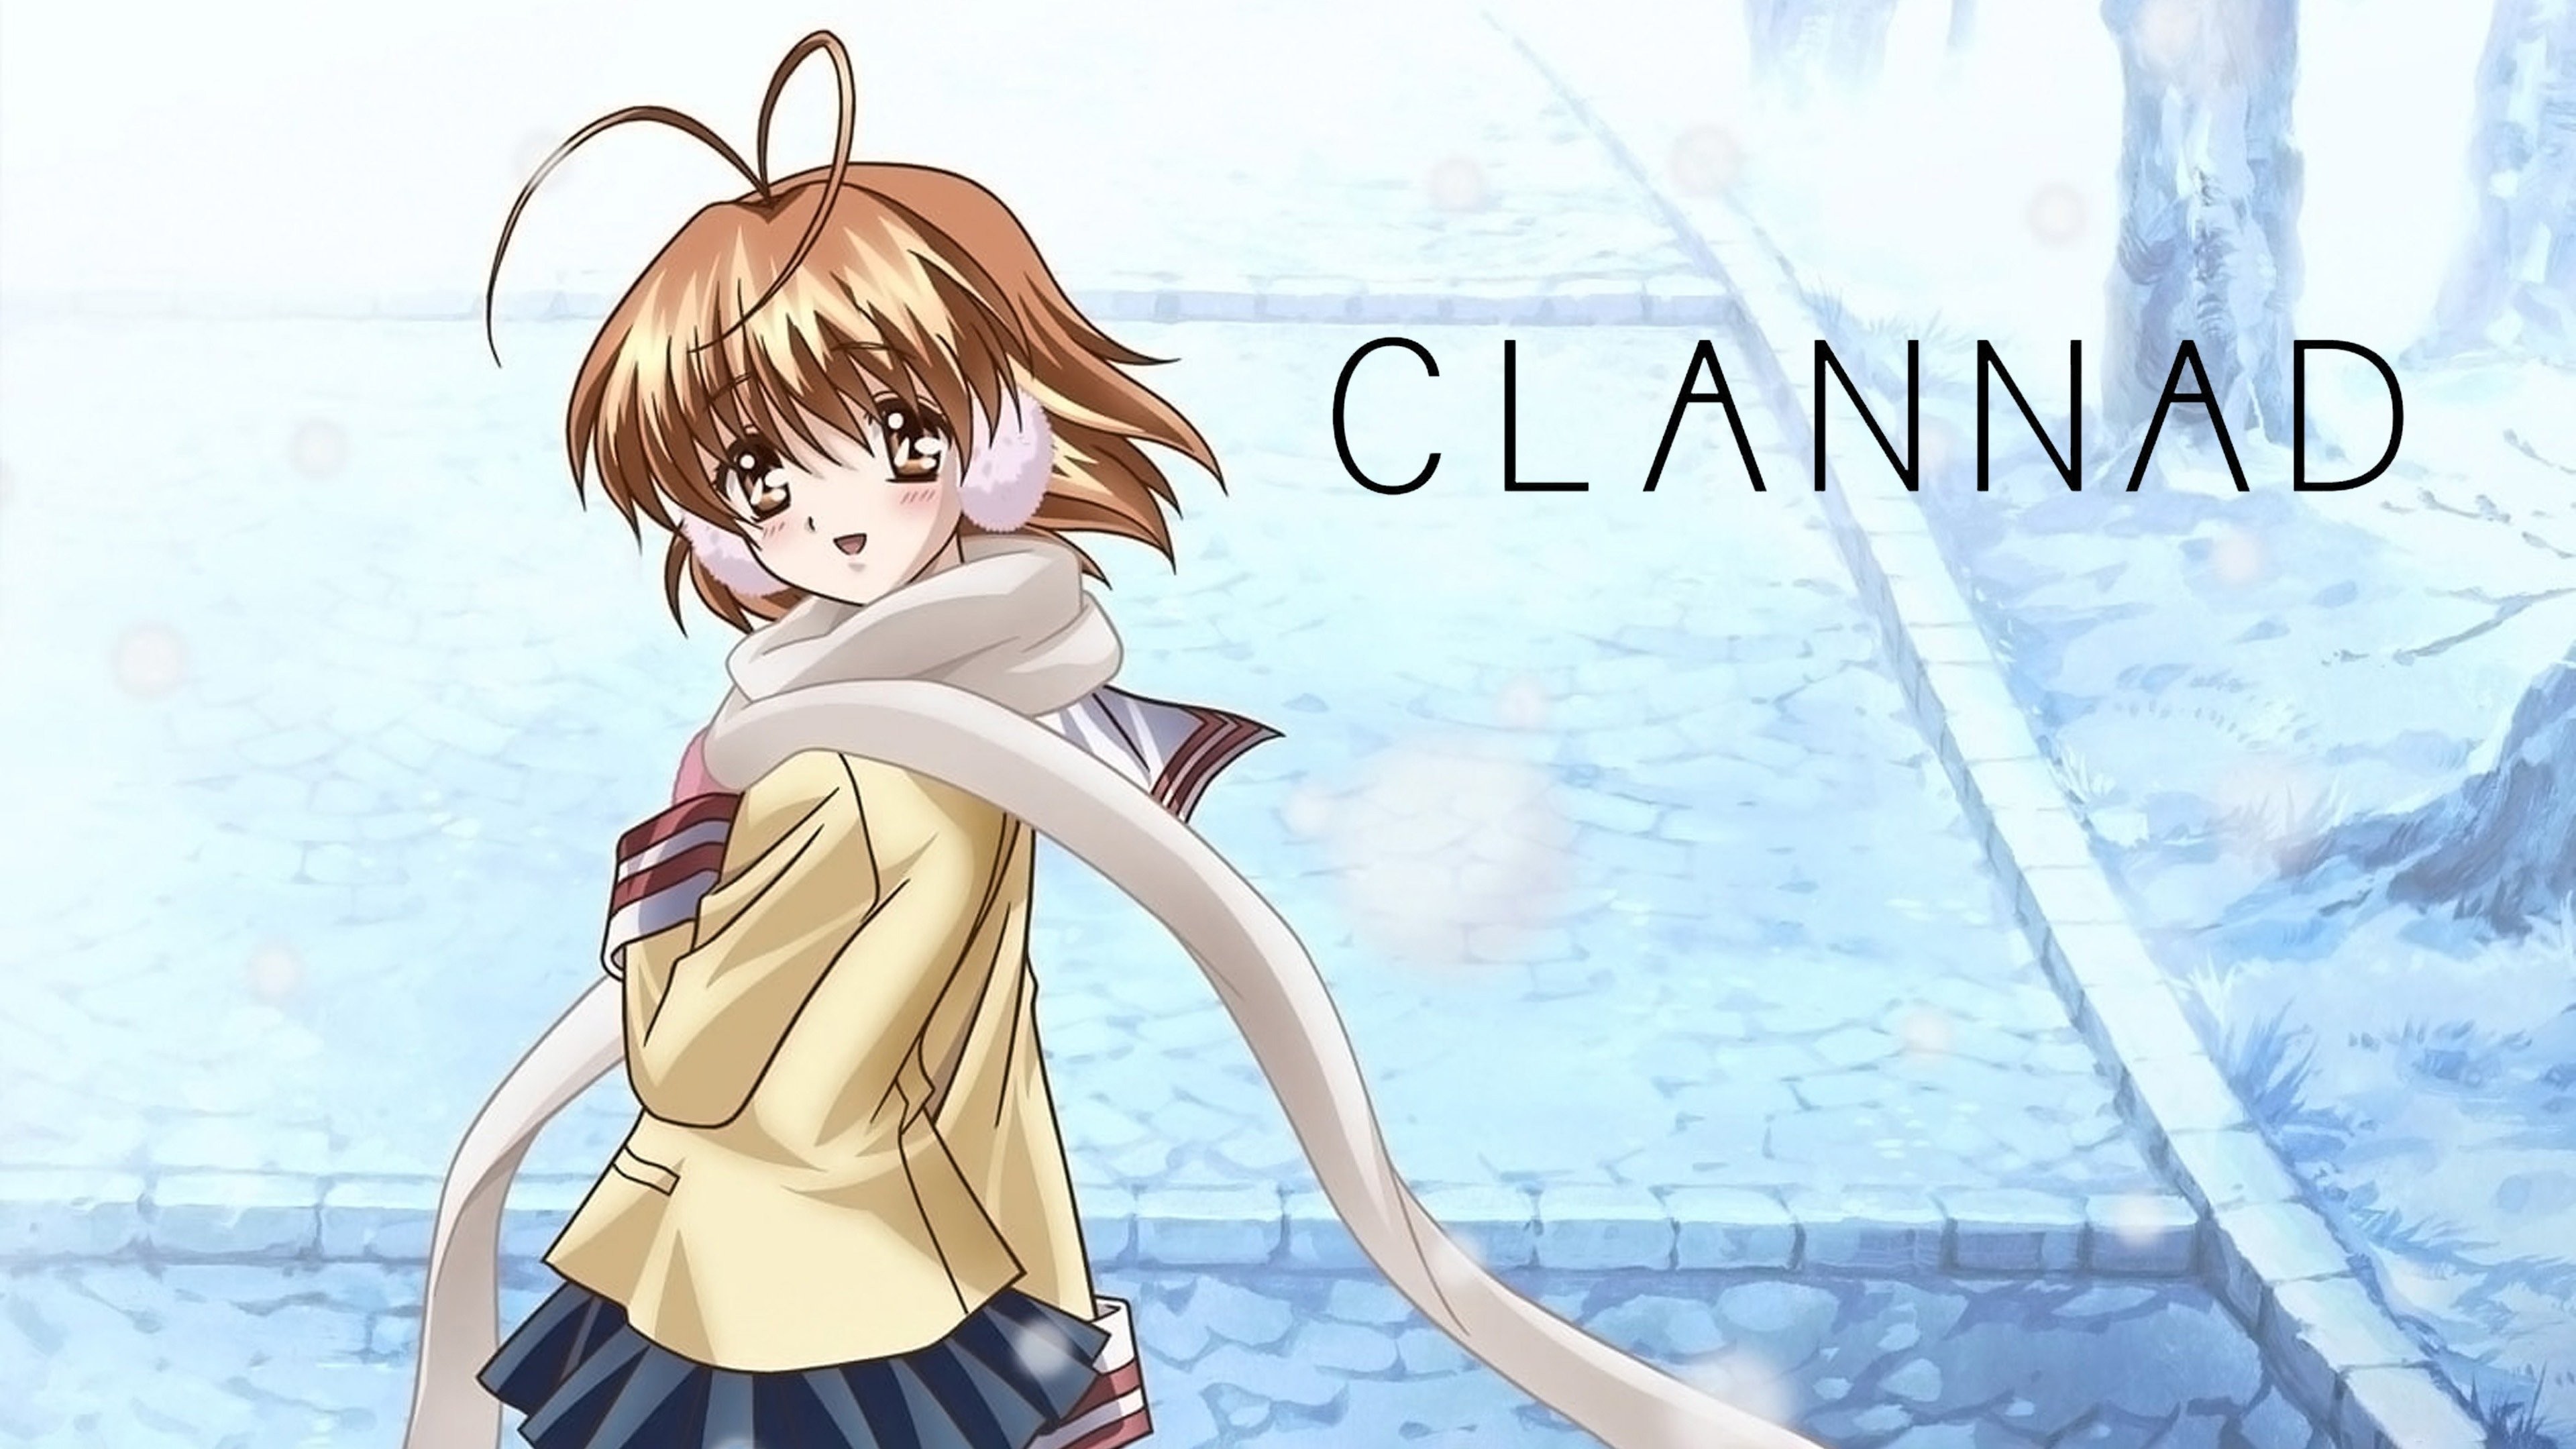 Clannad - Kyou i00064 ☆ Amaterasu anime art and photo